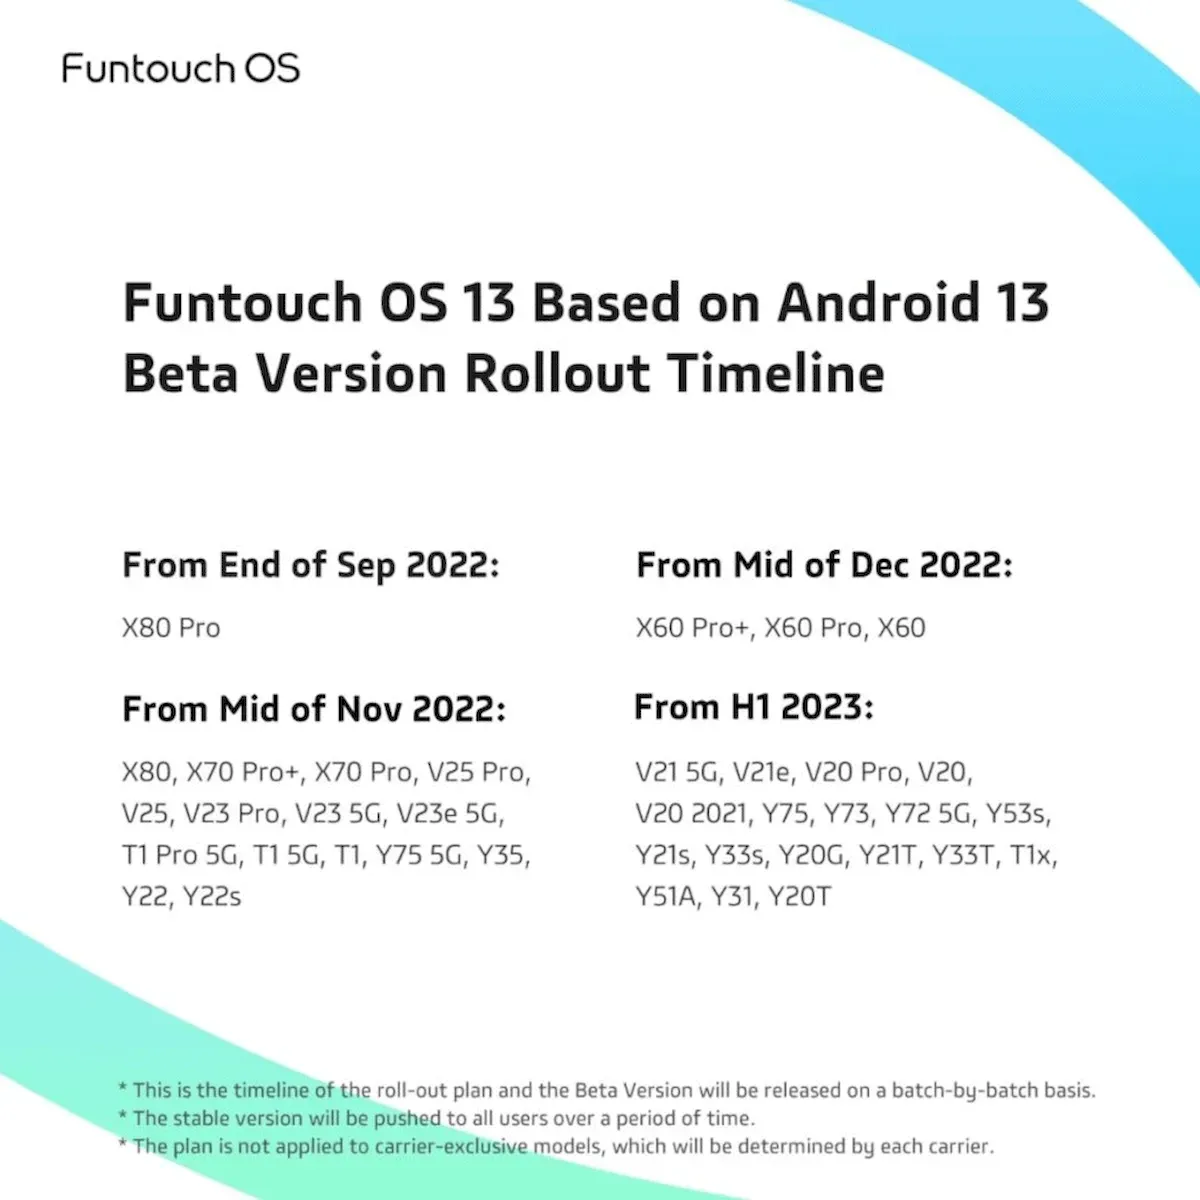 Confira alguns detalhes do Funtouch OS 13